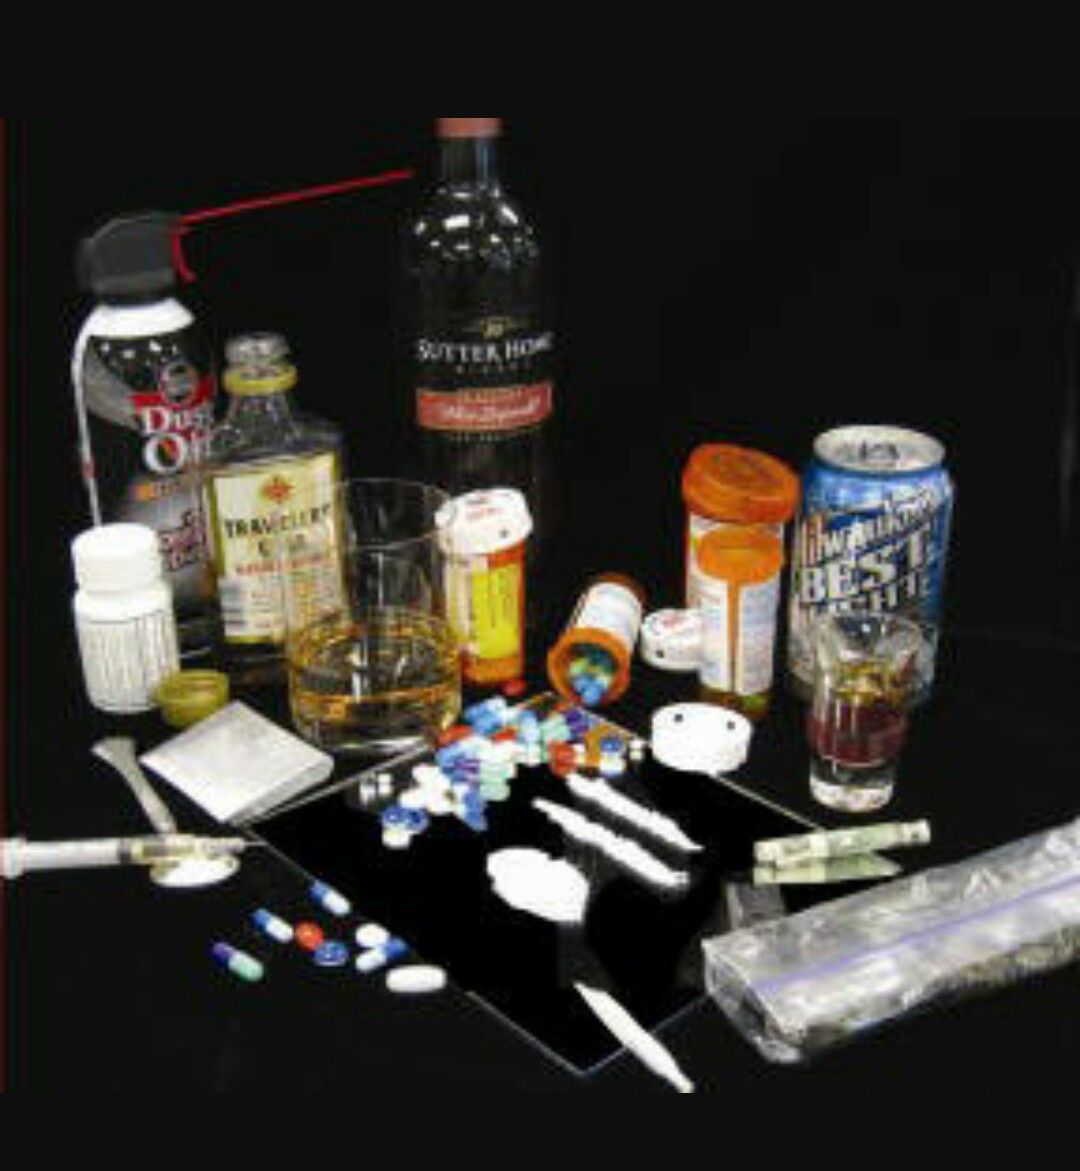 Black Market Illegal Drugs